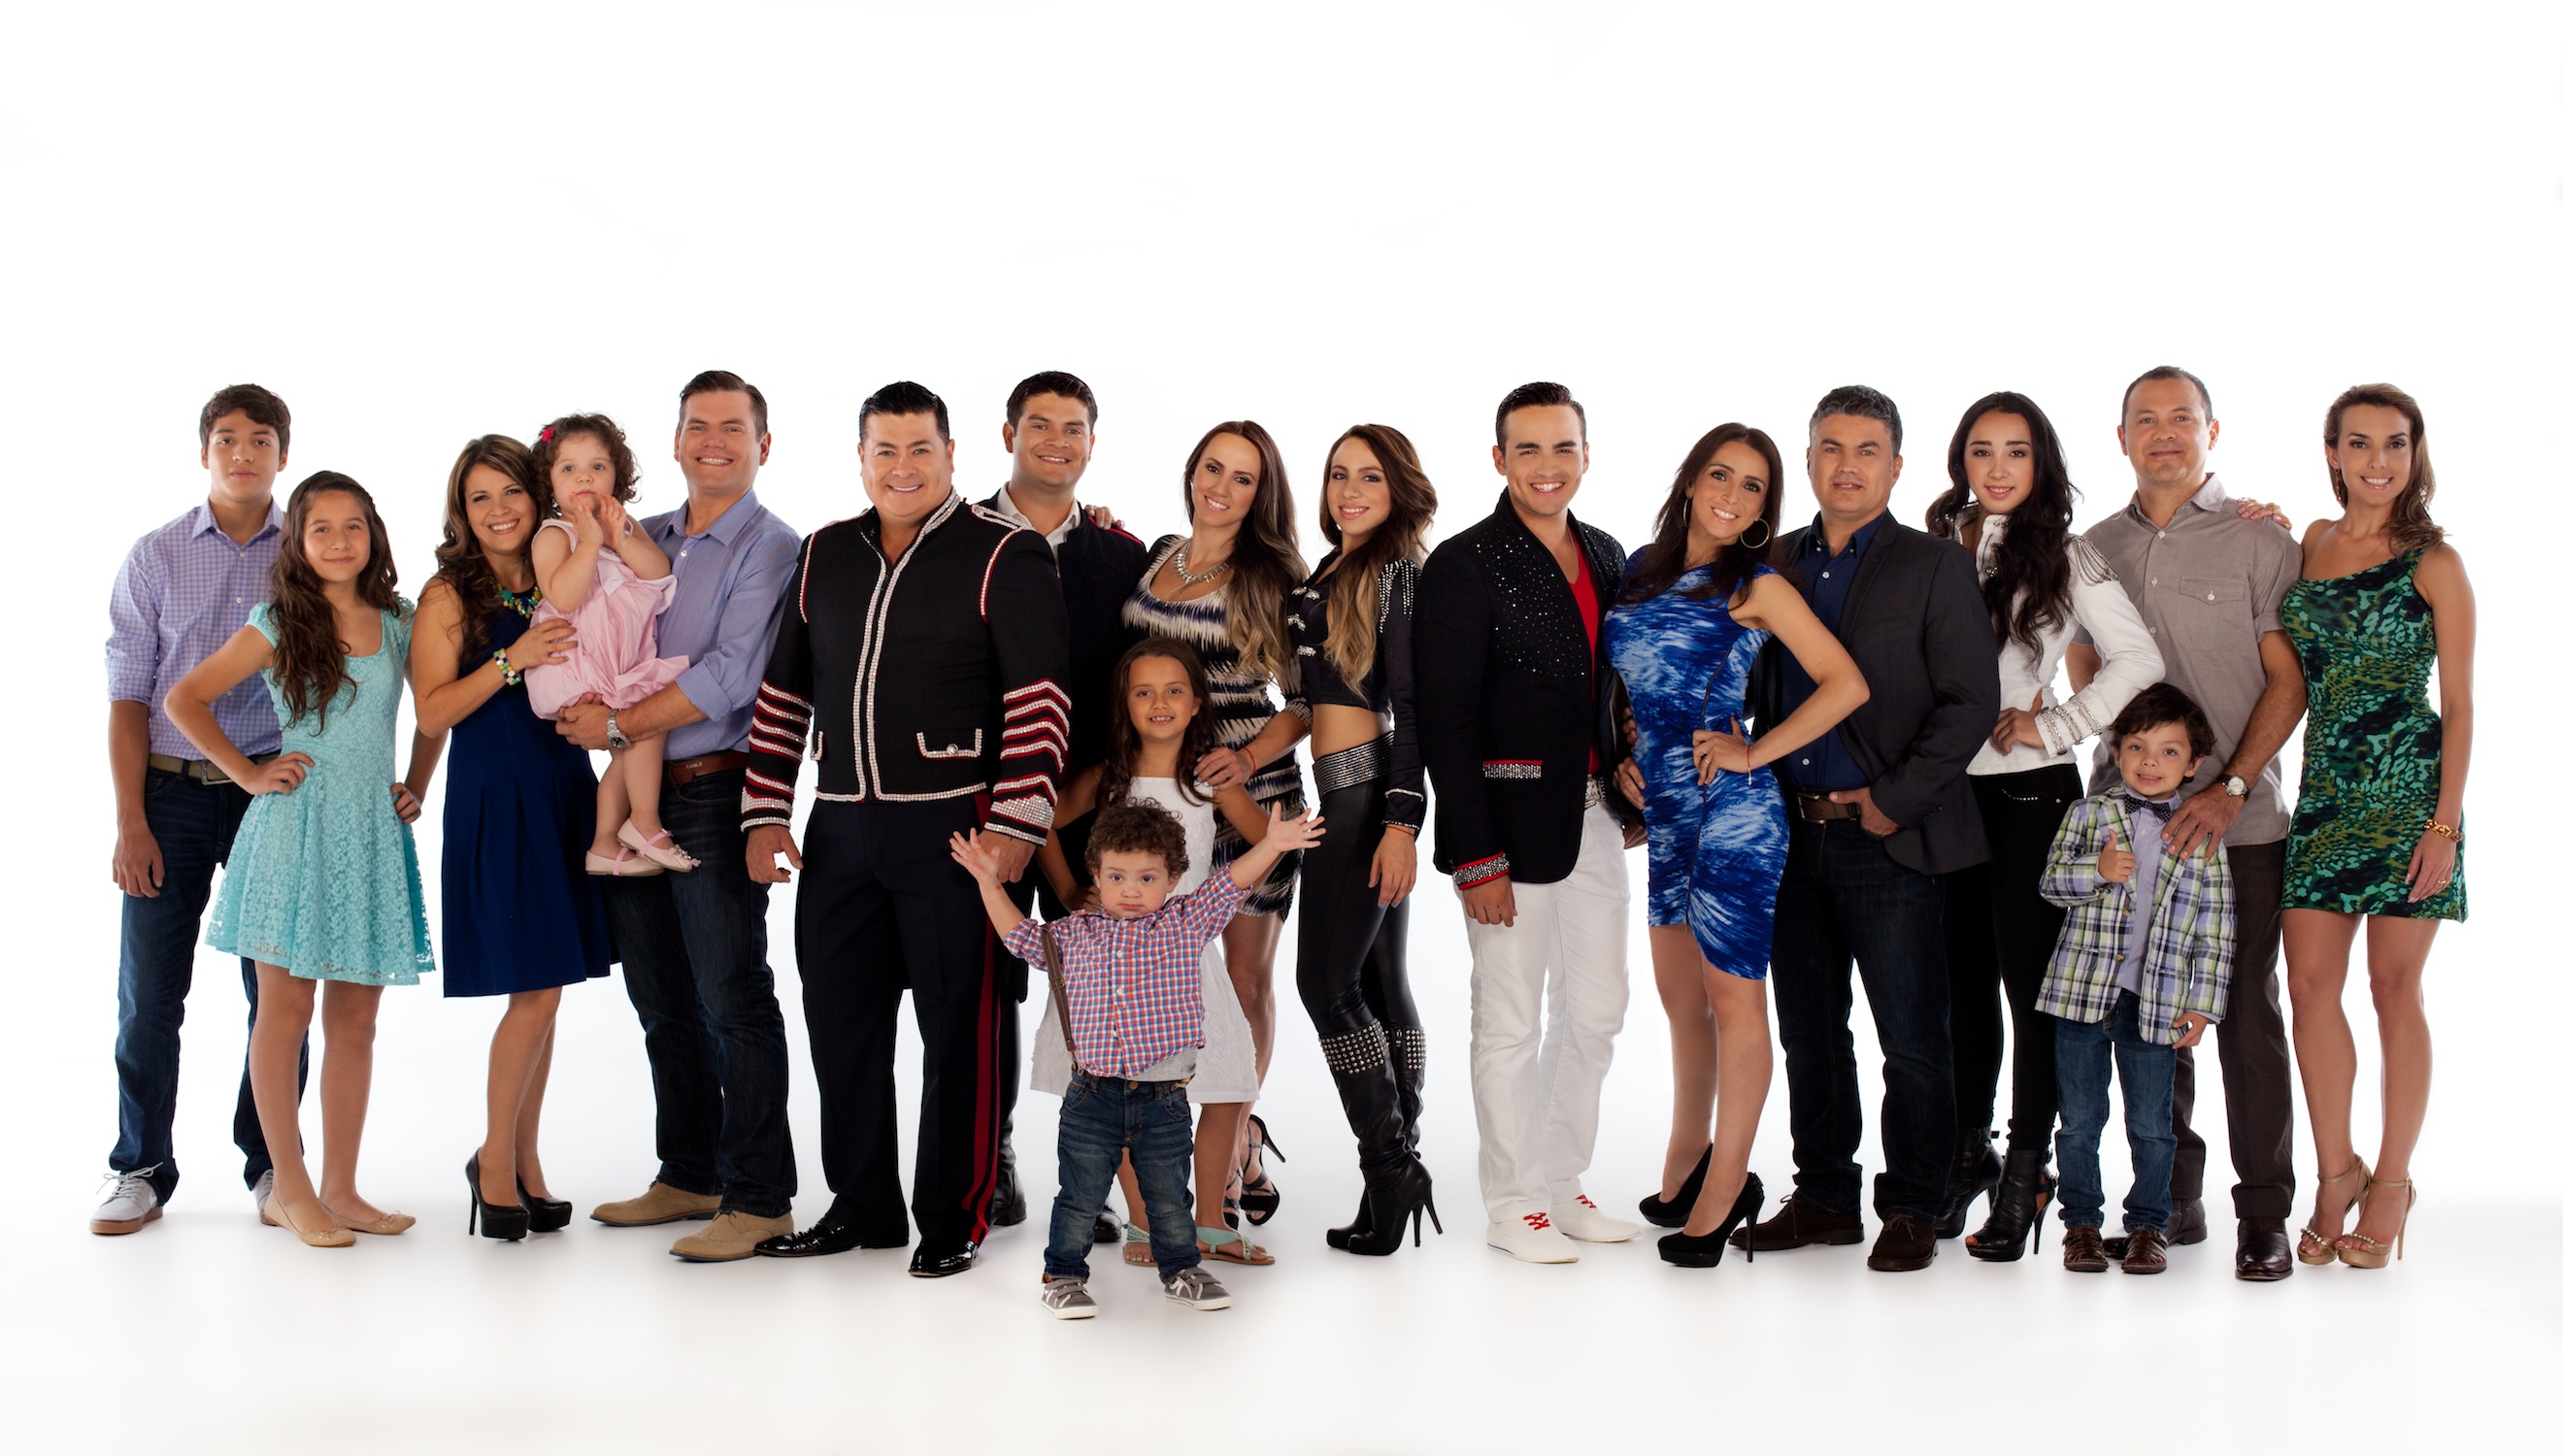 Hispanic Family Drama, Humor and Acrobatics all Premiere on Tr3s’ New Reality Series ‘Familia De Circo’